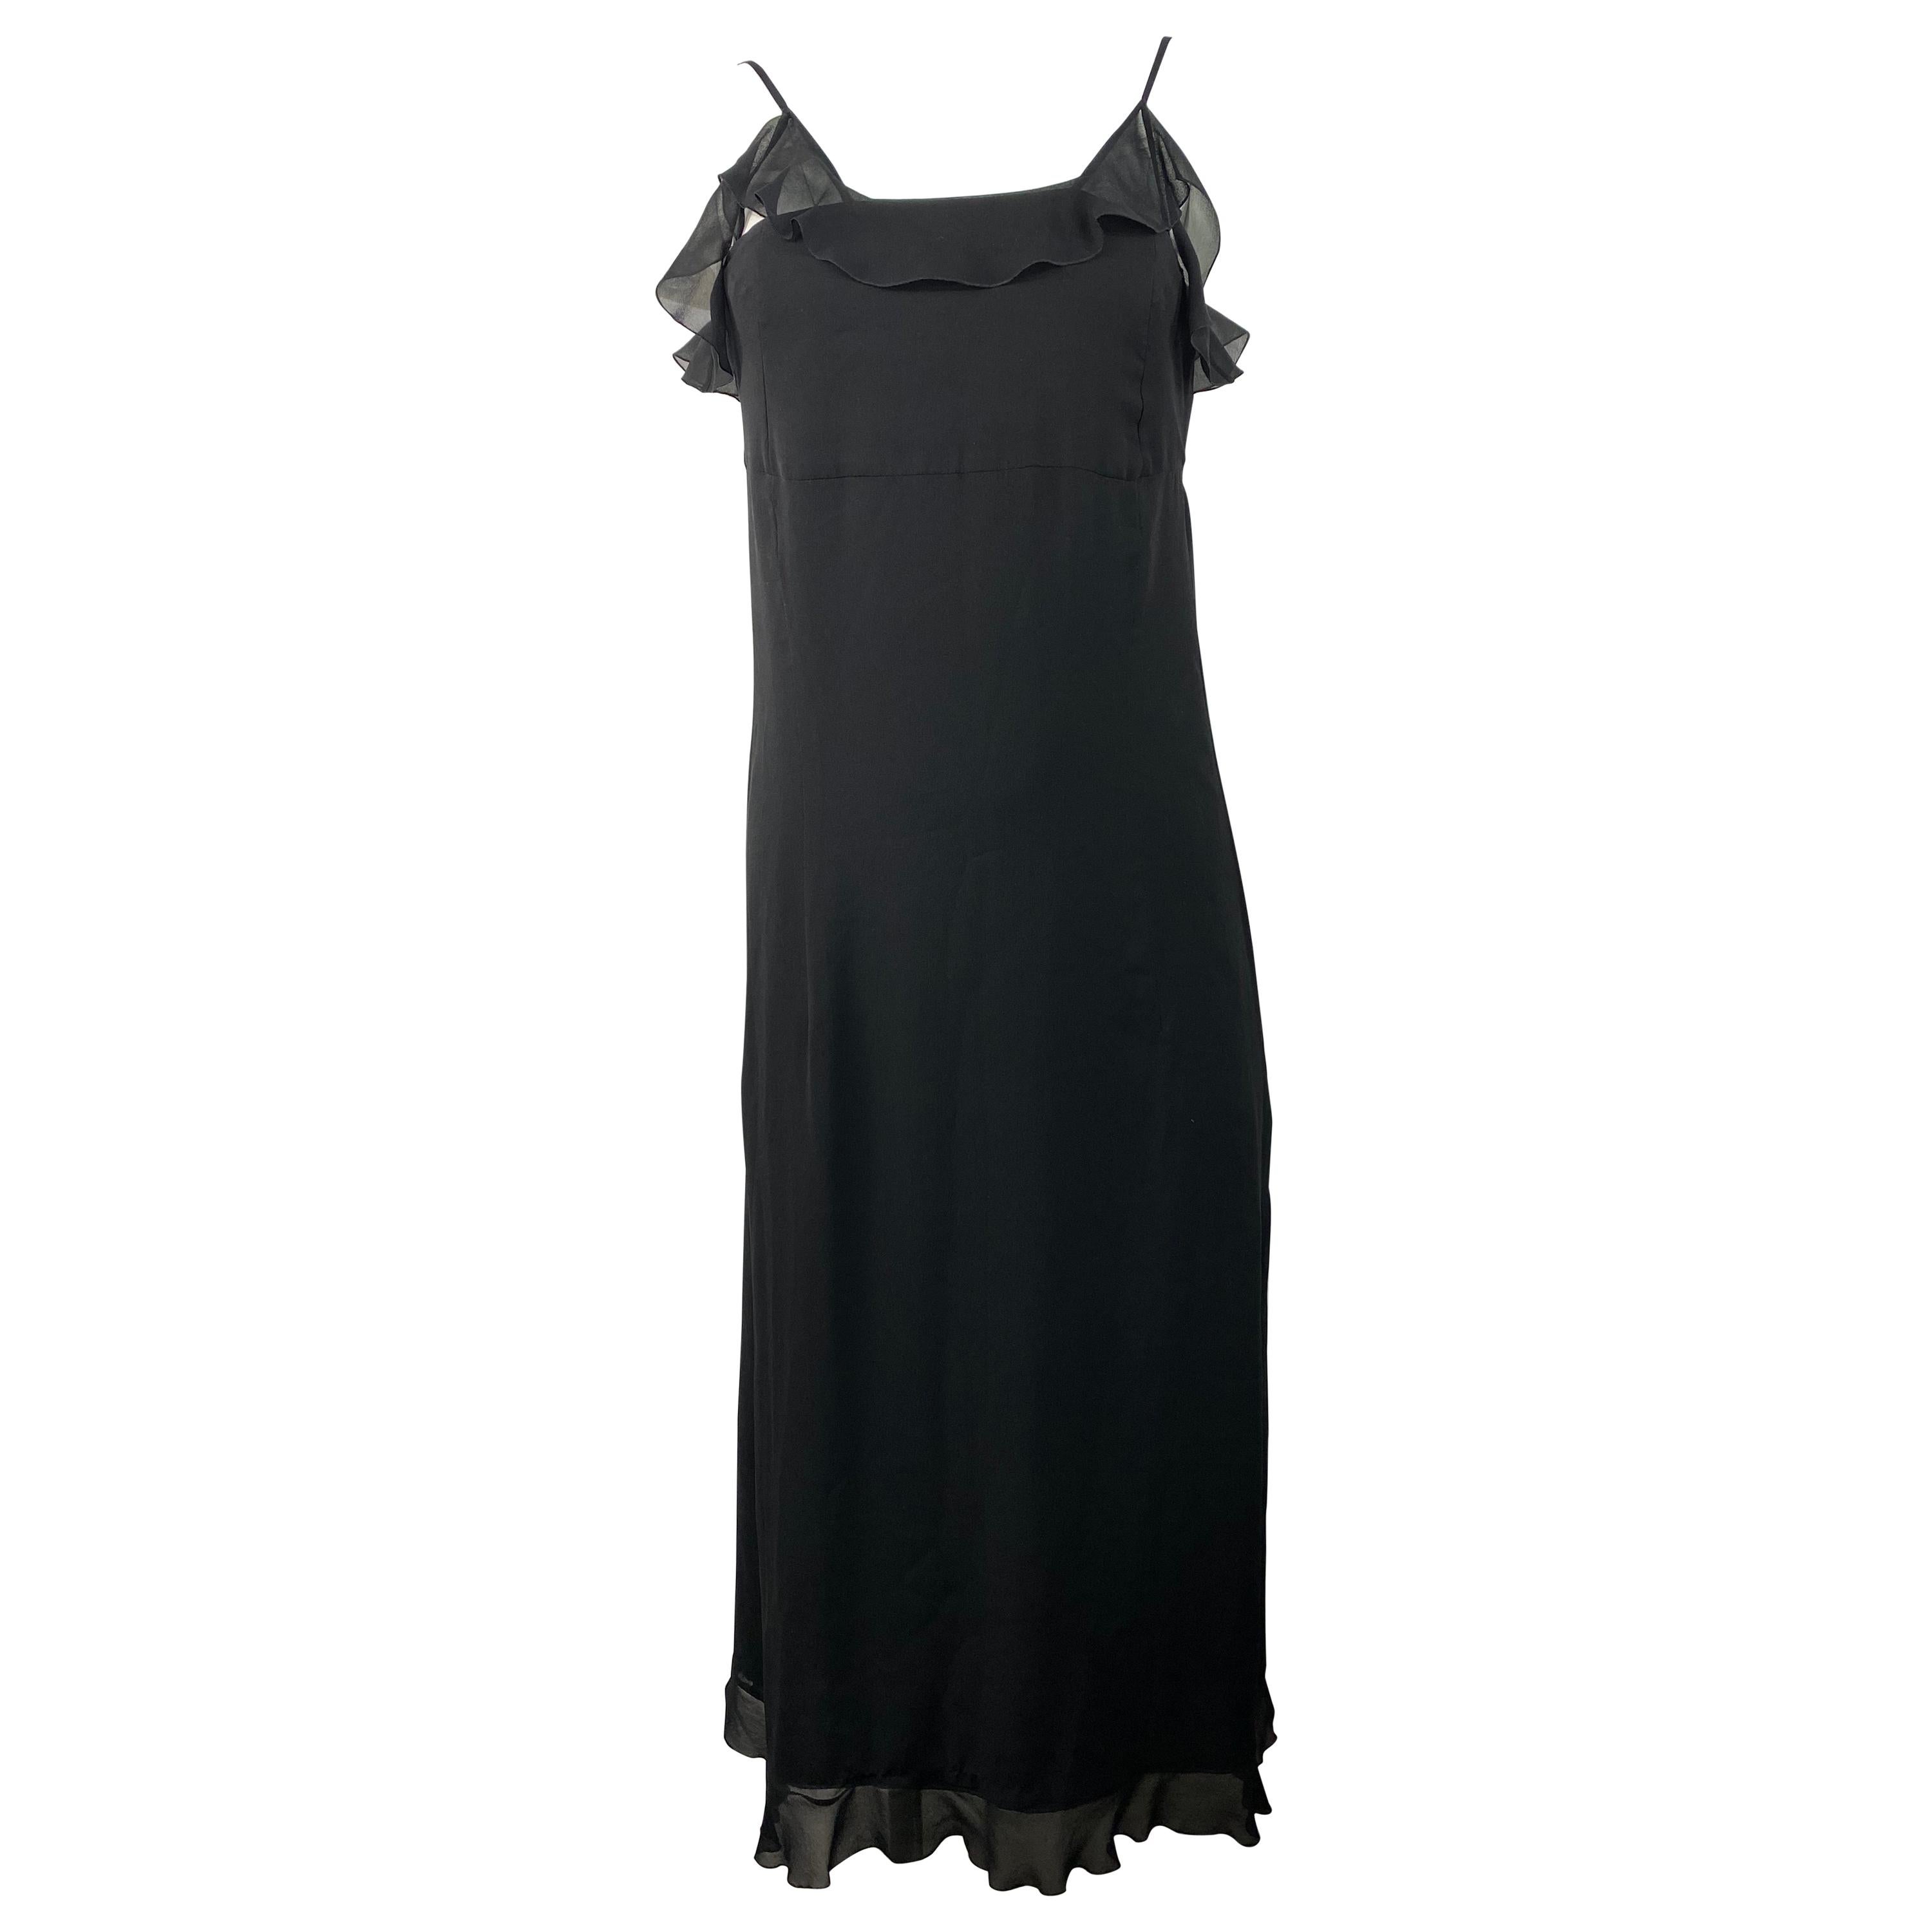 Chanel Boutique Black Silk Slip Dress Size 38